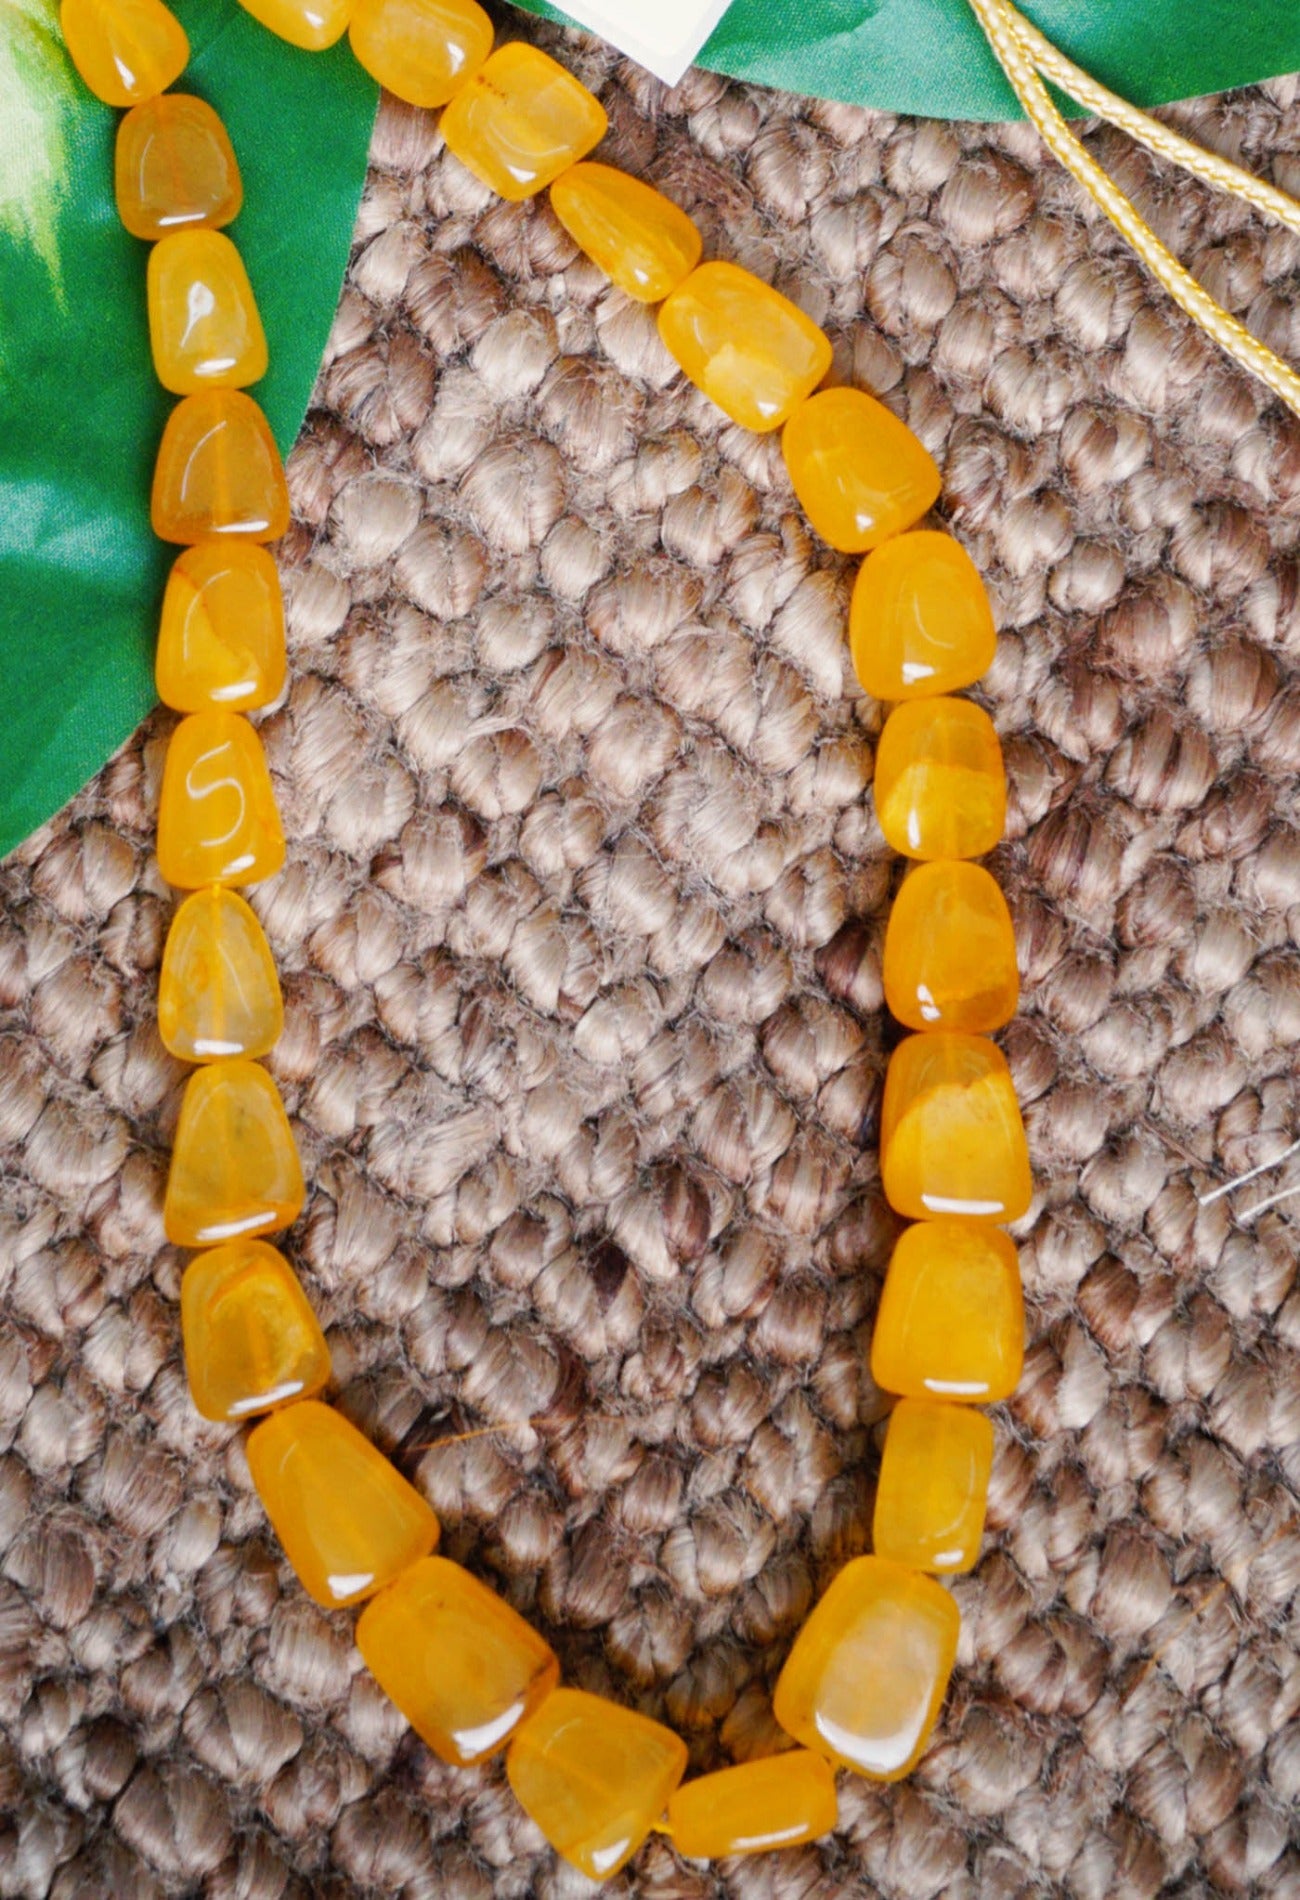 Yellow Amravati Ocean Beads Necklace with Thread-UJ373